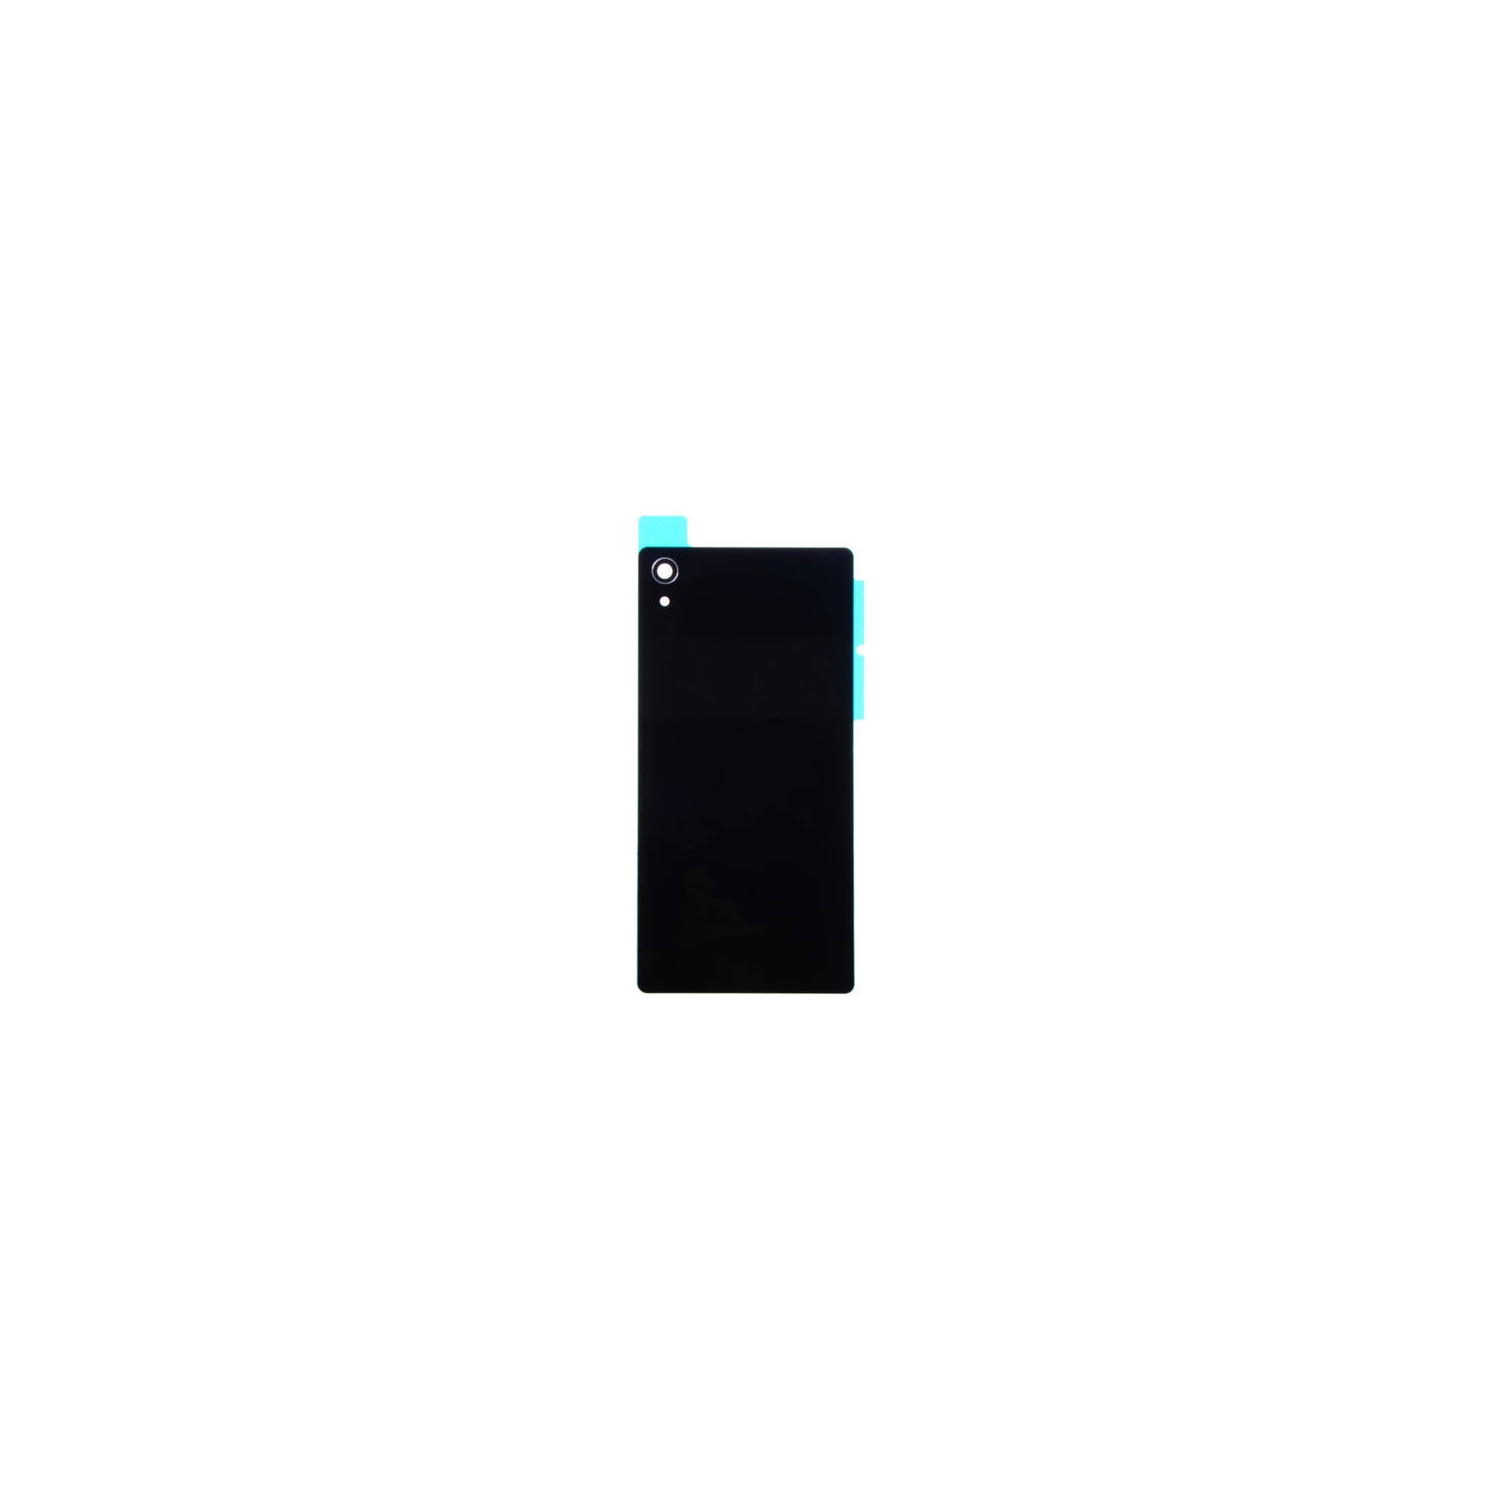 Sony Xperia Z2 Battery Door Back Cover – Black